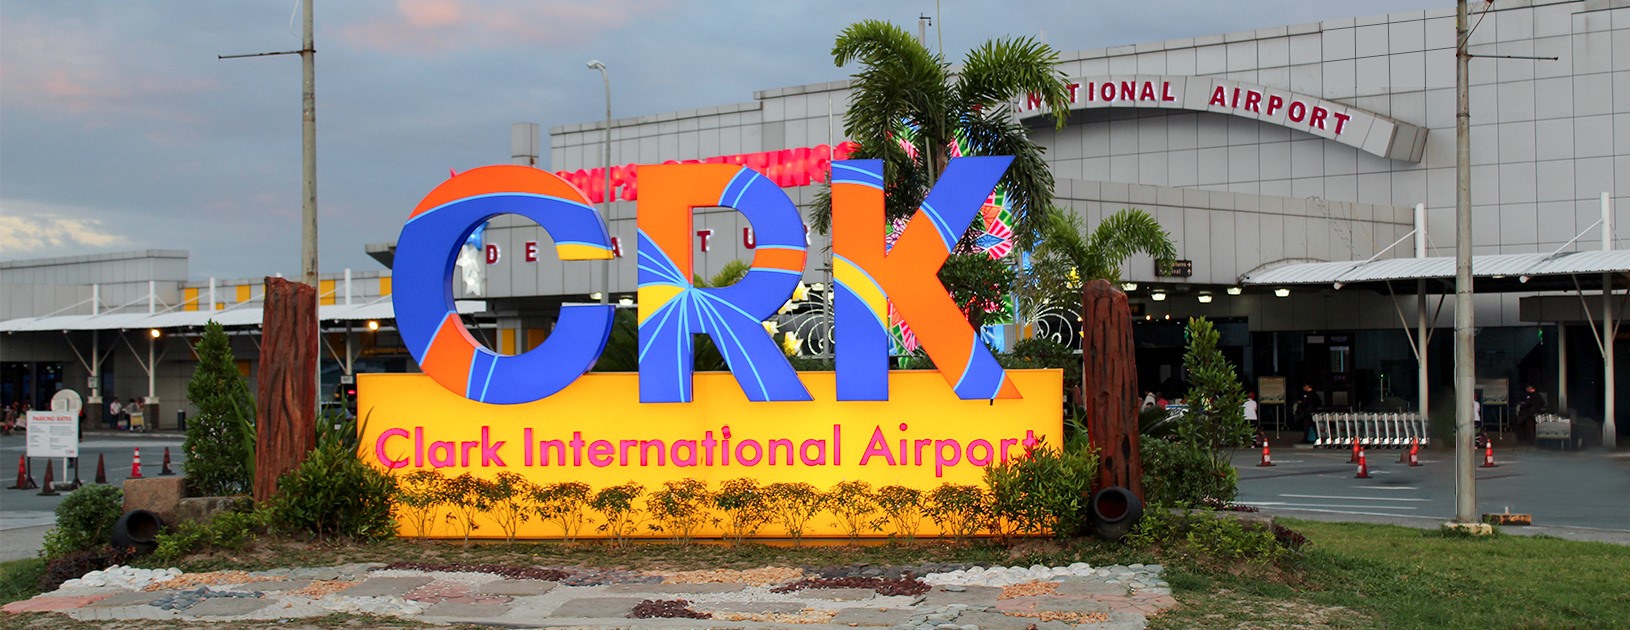 clark international airport flights